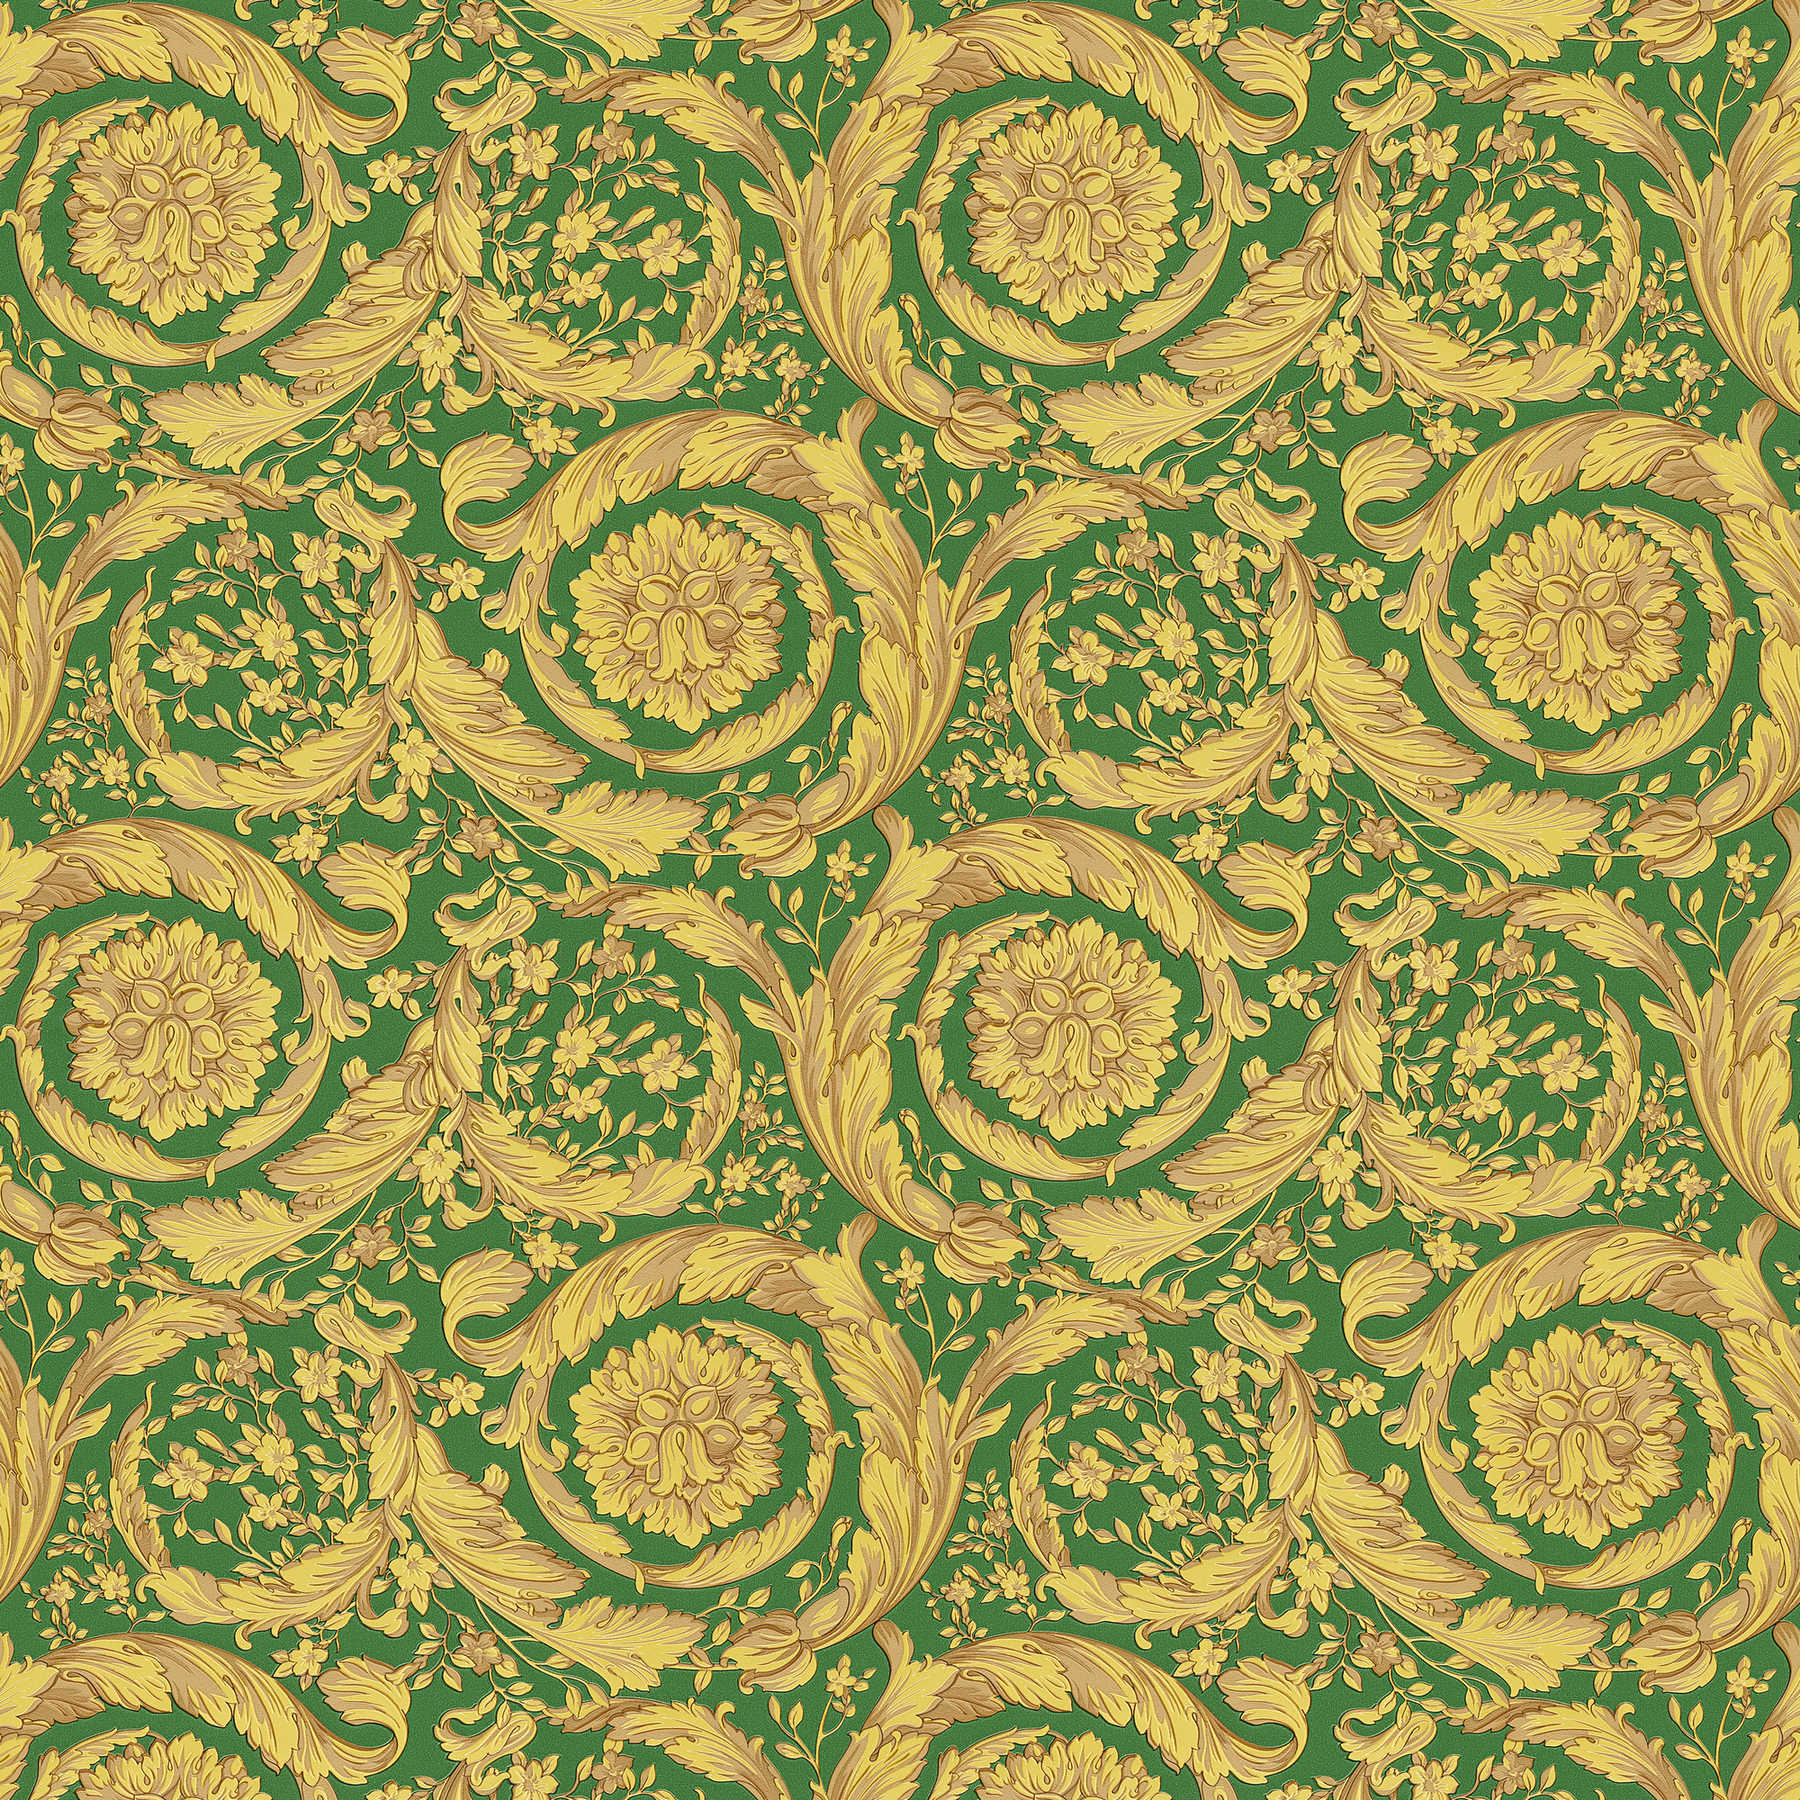 VERSACE wallpaper ornamental floral pattern - green, metallic, yellow
